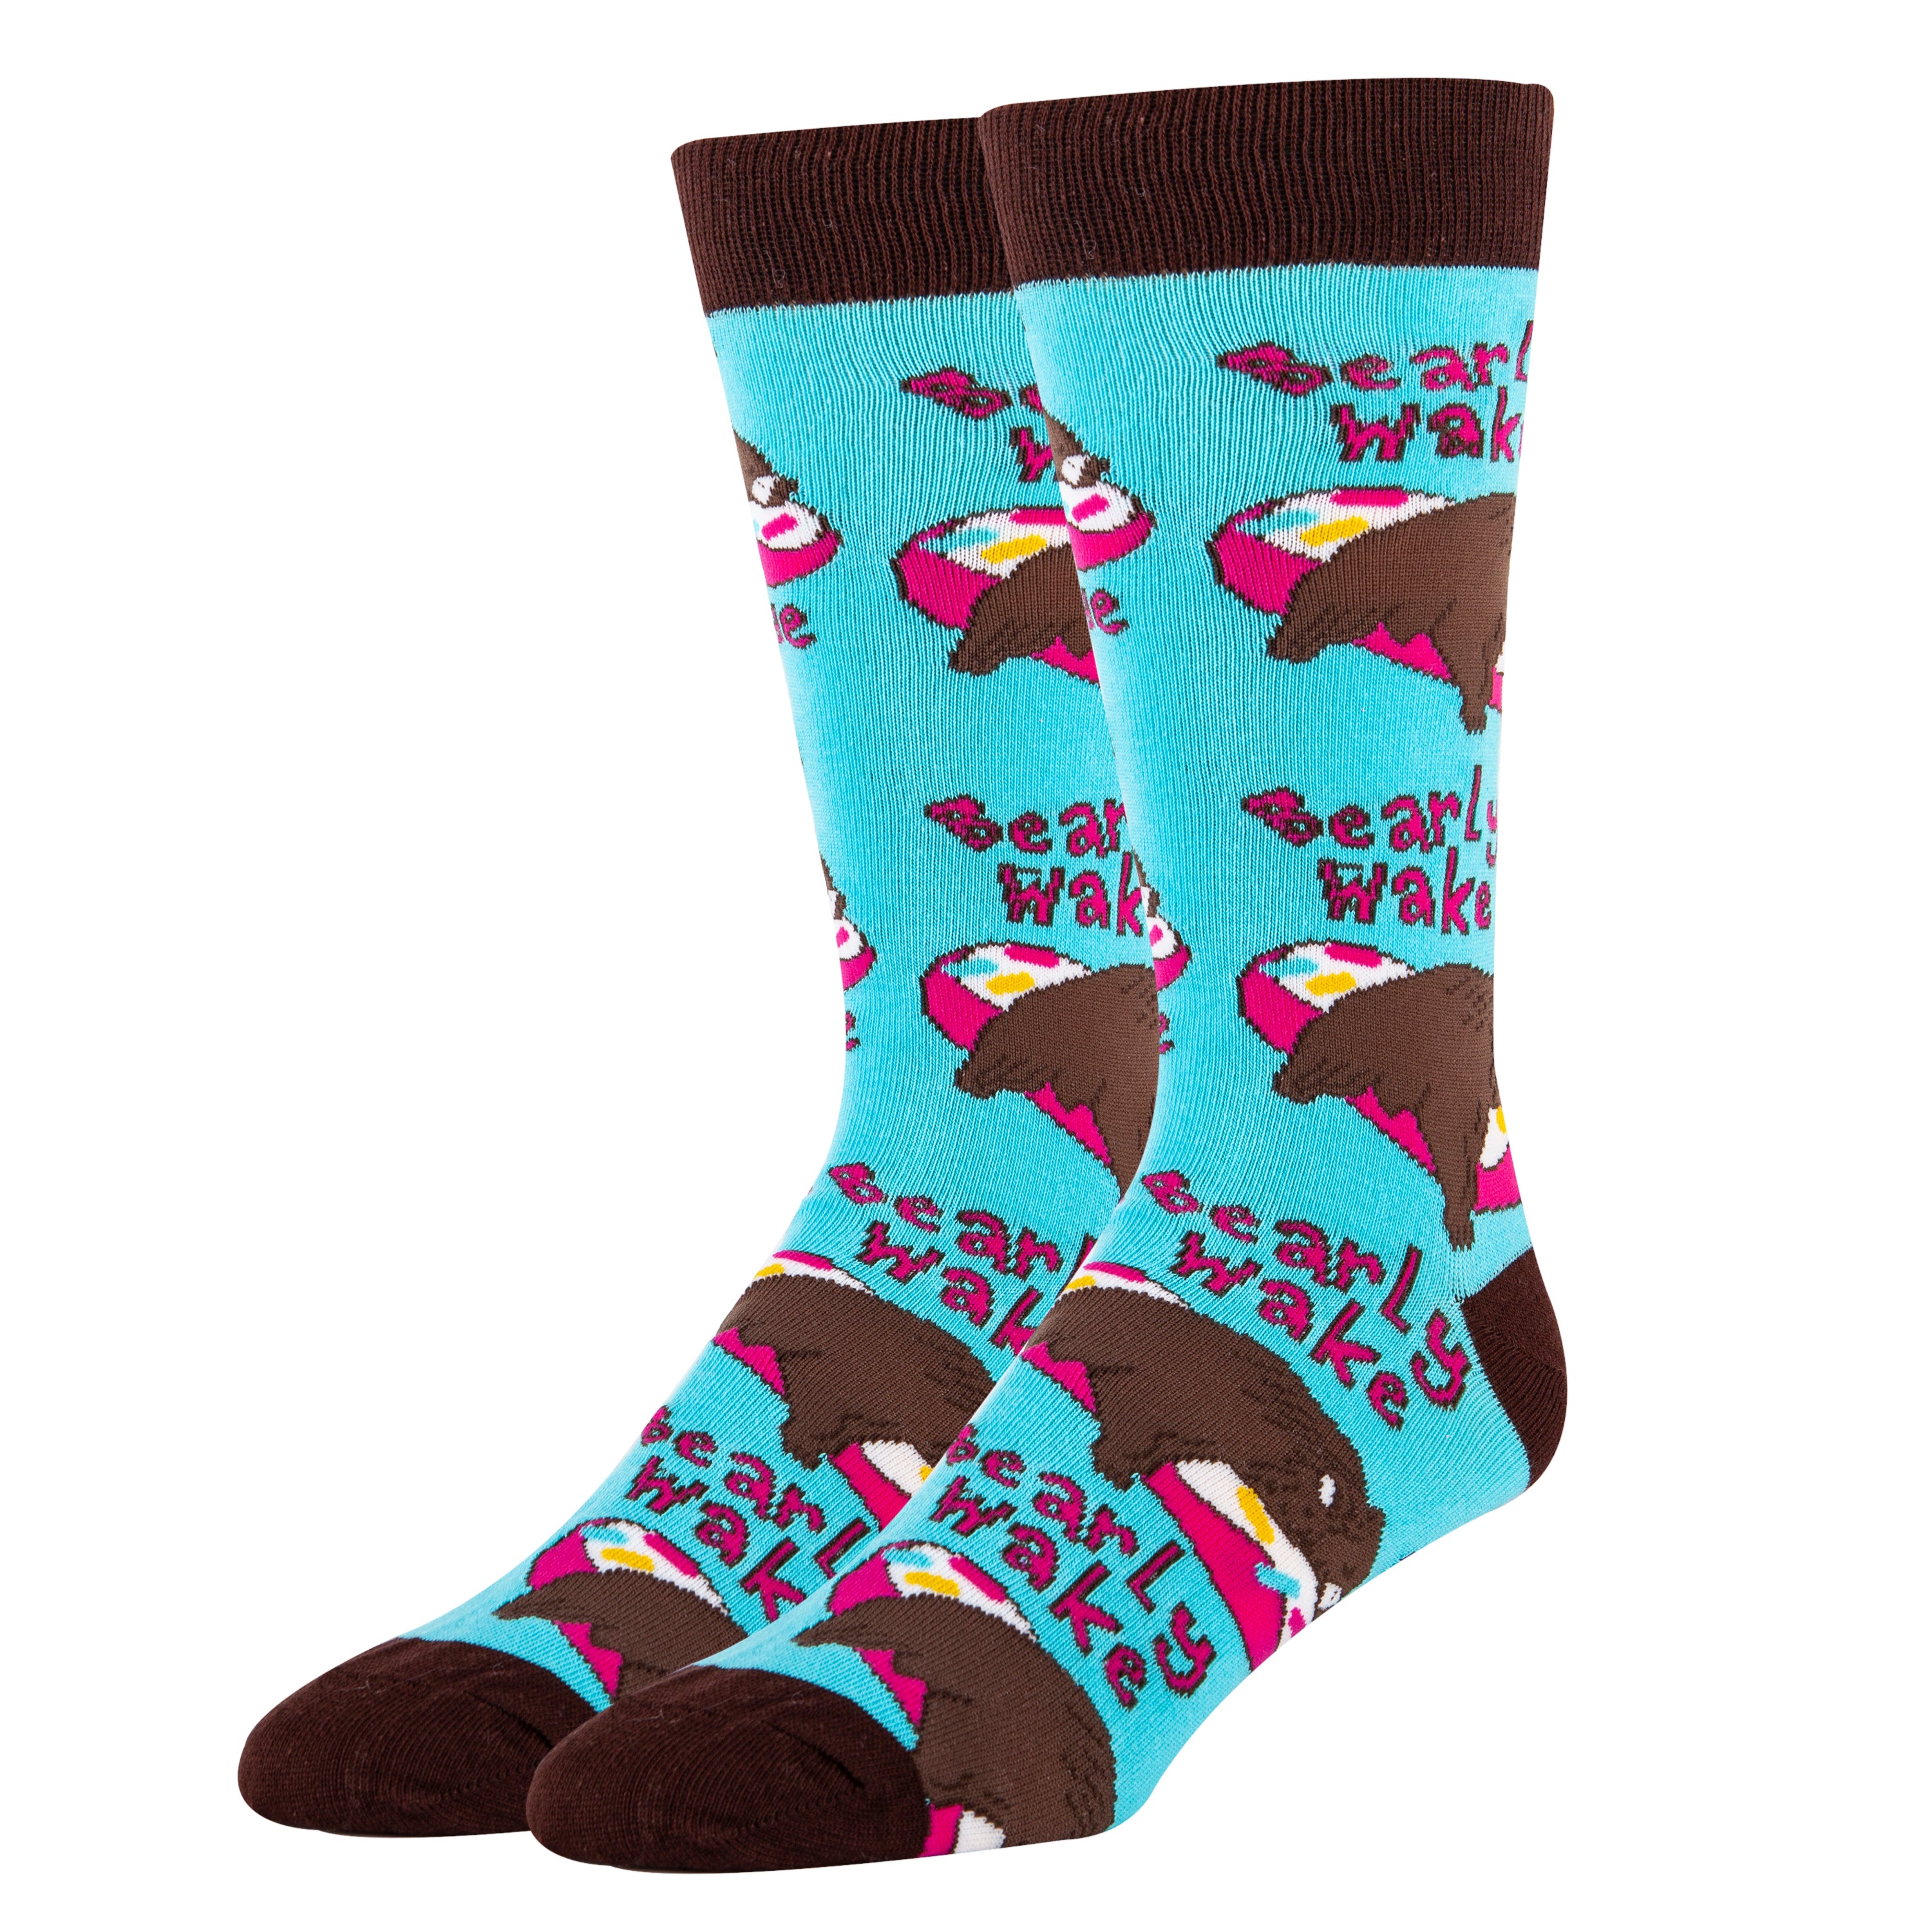 Bearly Awake Socks | Funny Crew Socks For Men